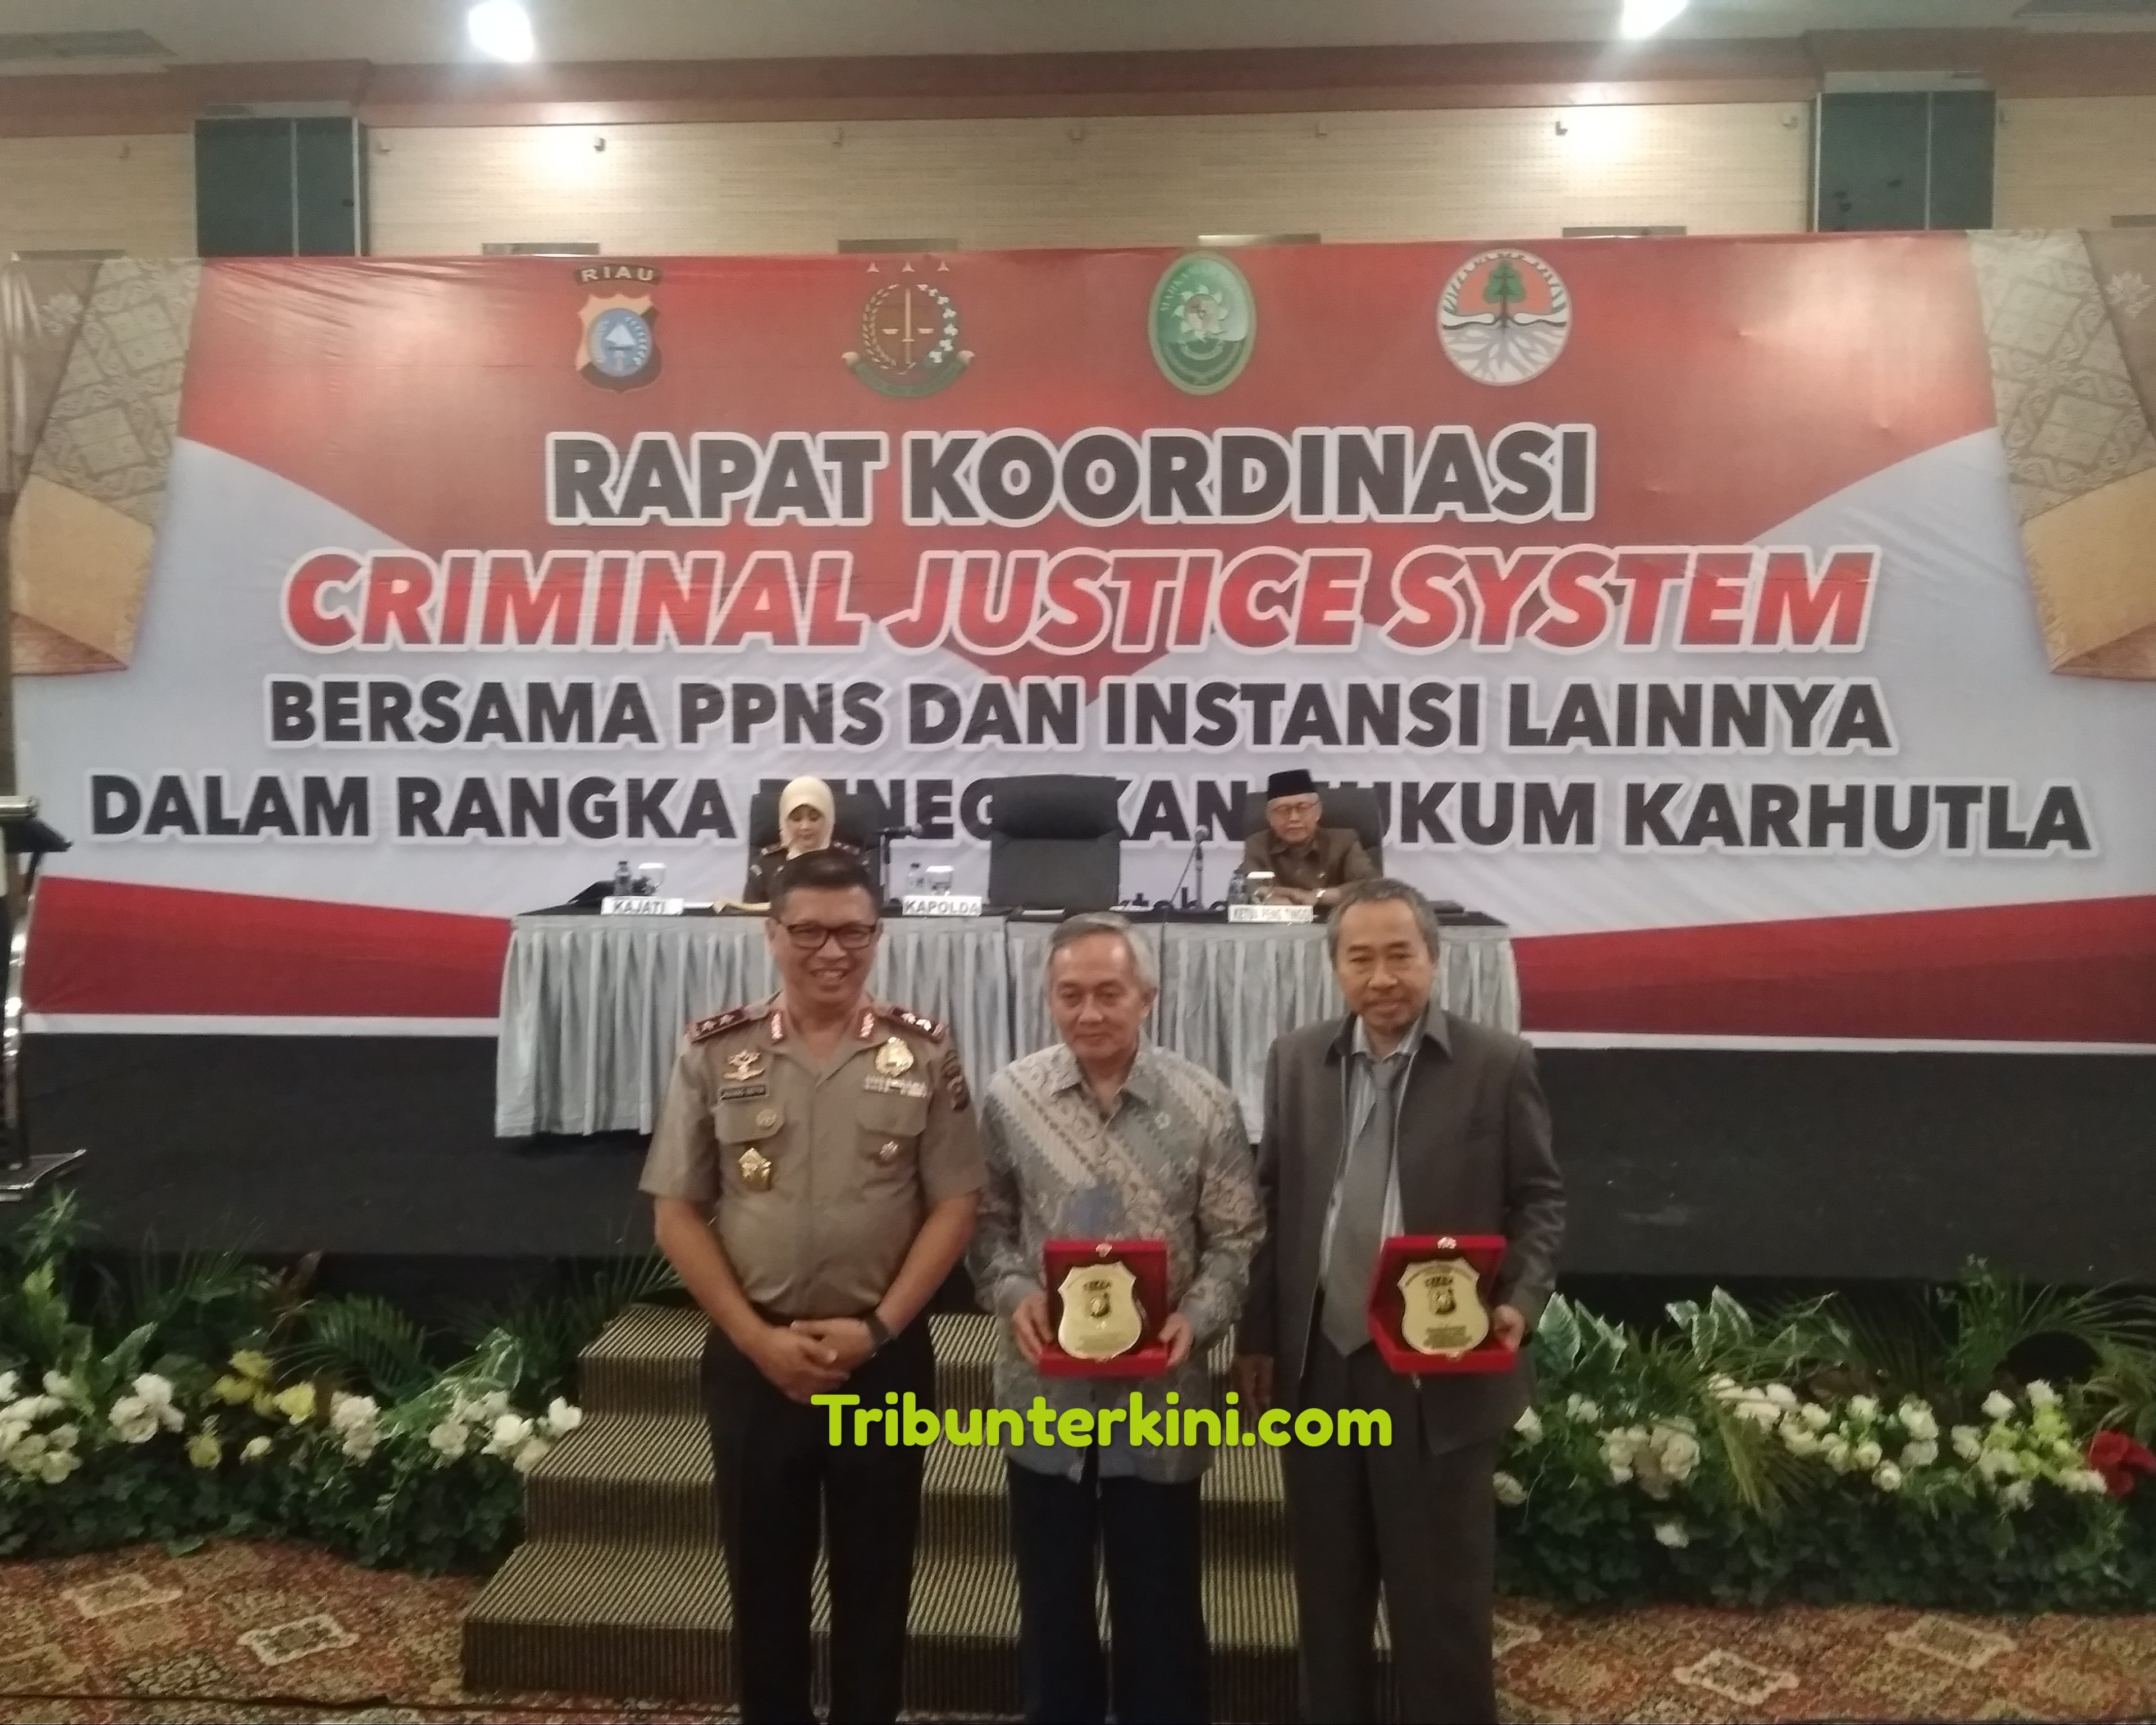 Kapolda Riau Hadiri Acara Rakor CJS Bersama PPNS dan Instansi, Dalam Rangka Penegakan Hukum Karhutla